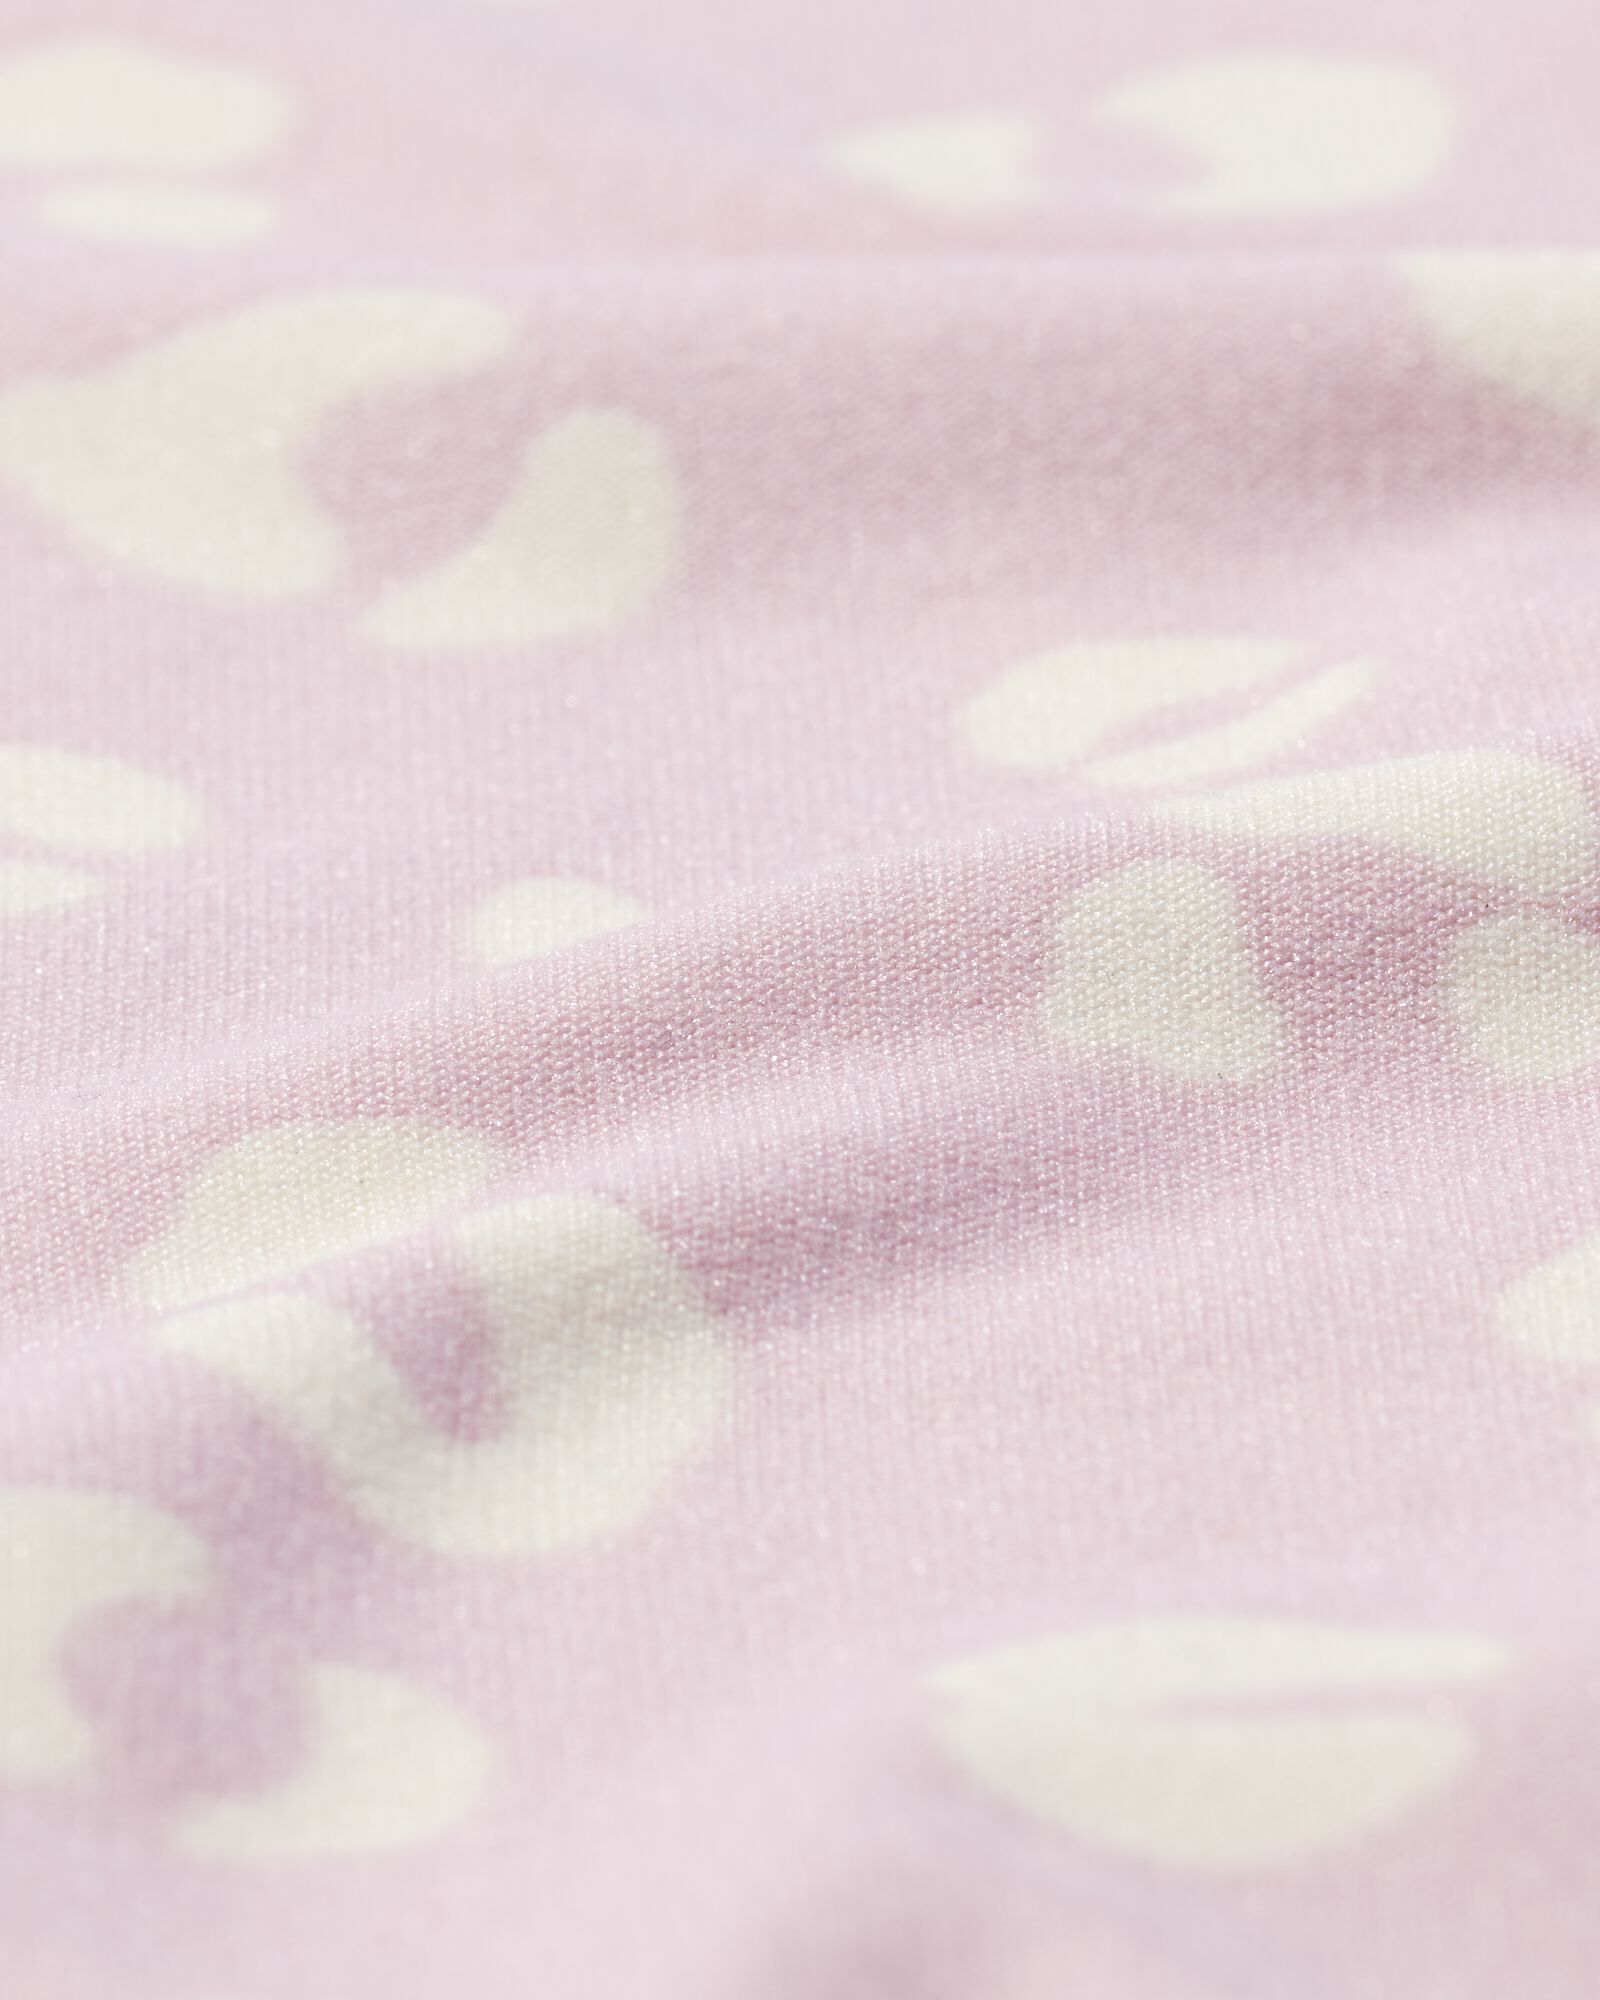 kinder pyjama micro animal lila lila - 23010480LILAC - HEMA